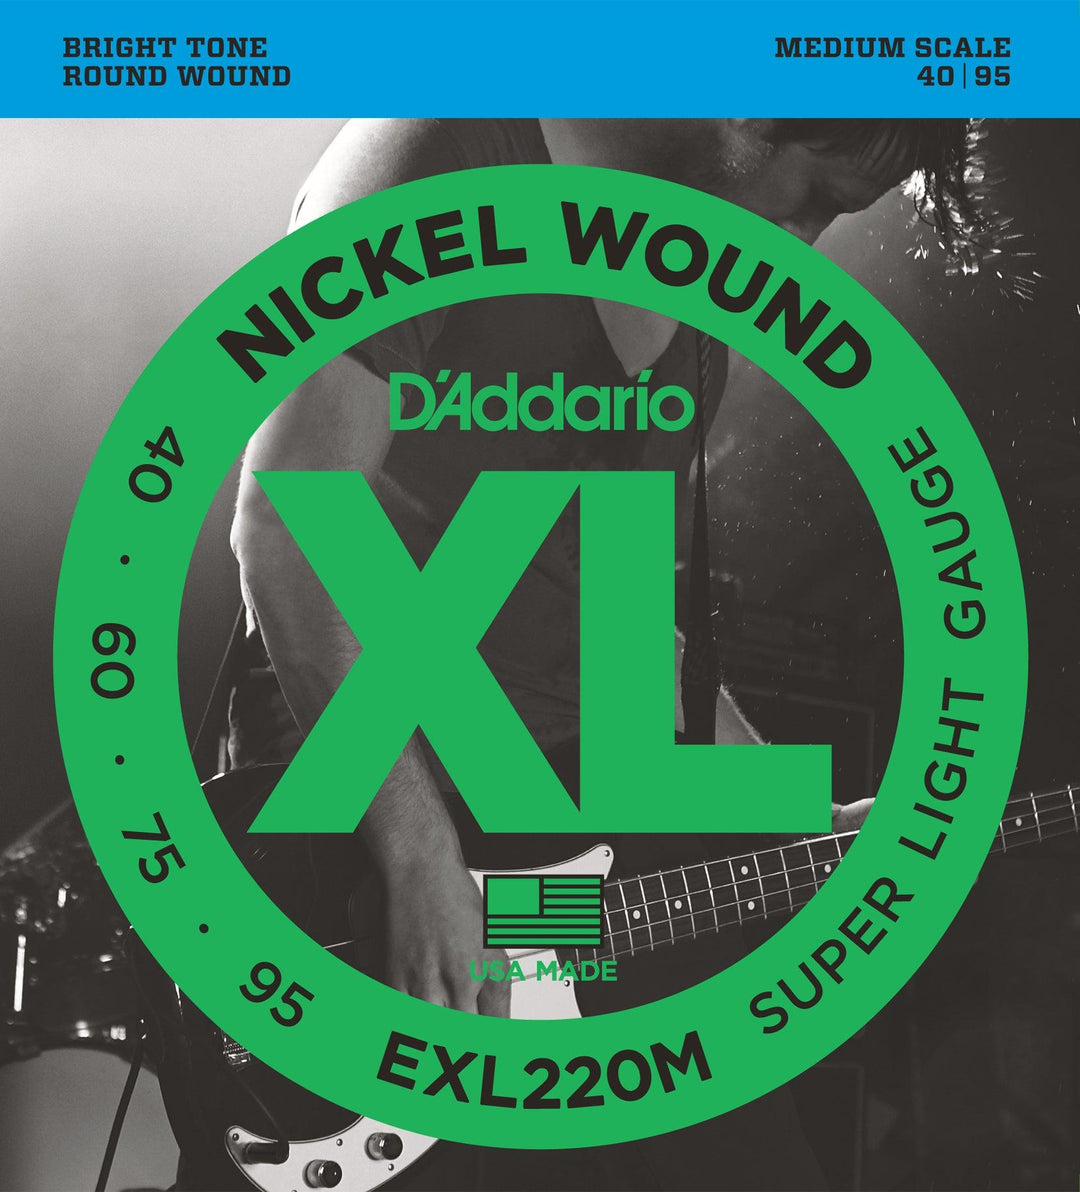 D'Addario XL Bass Guitar String Set, Nickel, EXL220M Super Light .040-.095, Medium Scale - A Strings